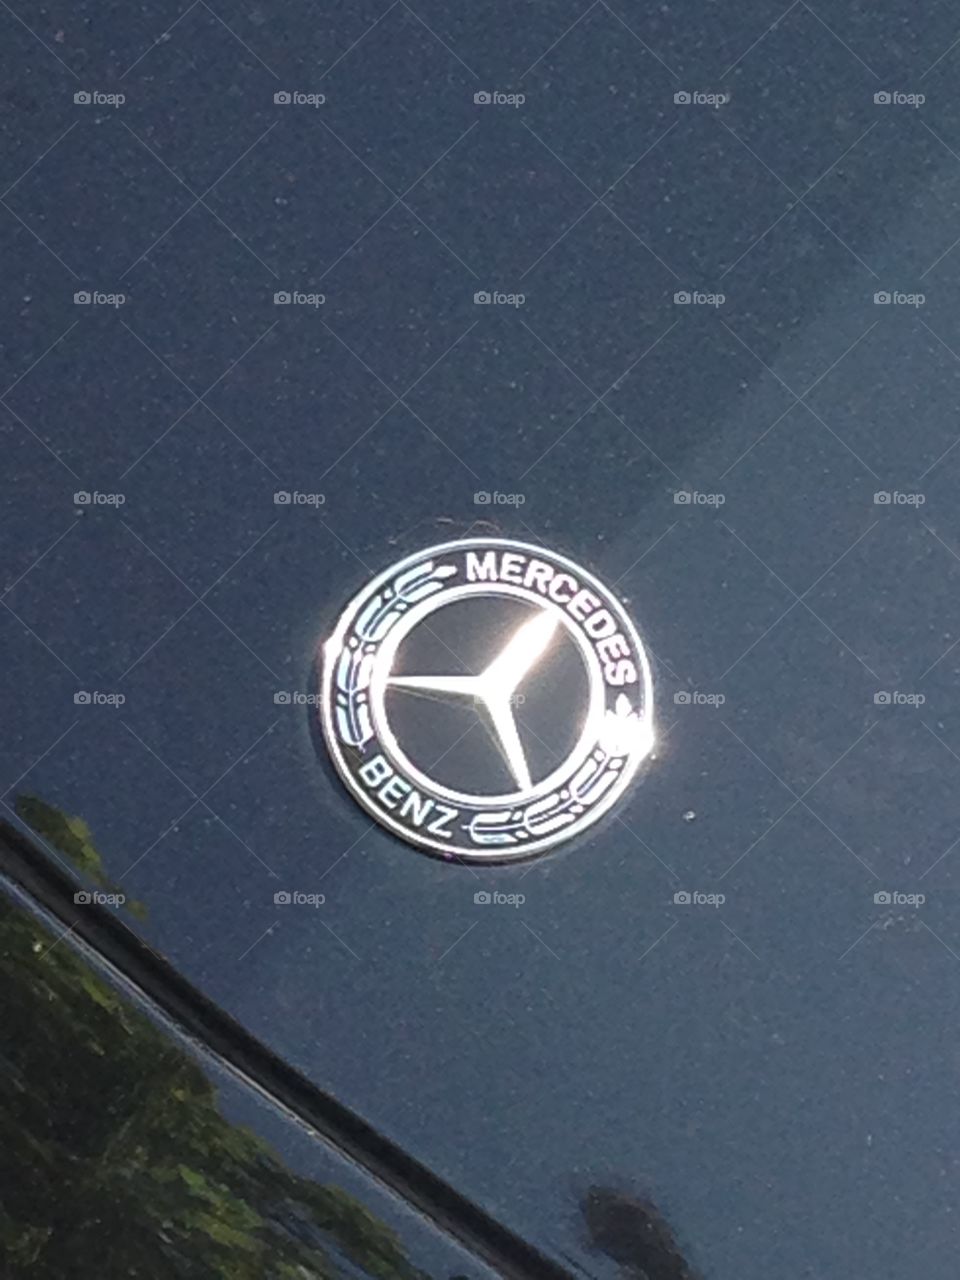 Gleaming Mercedes Benz hood ornament